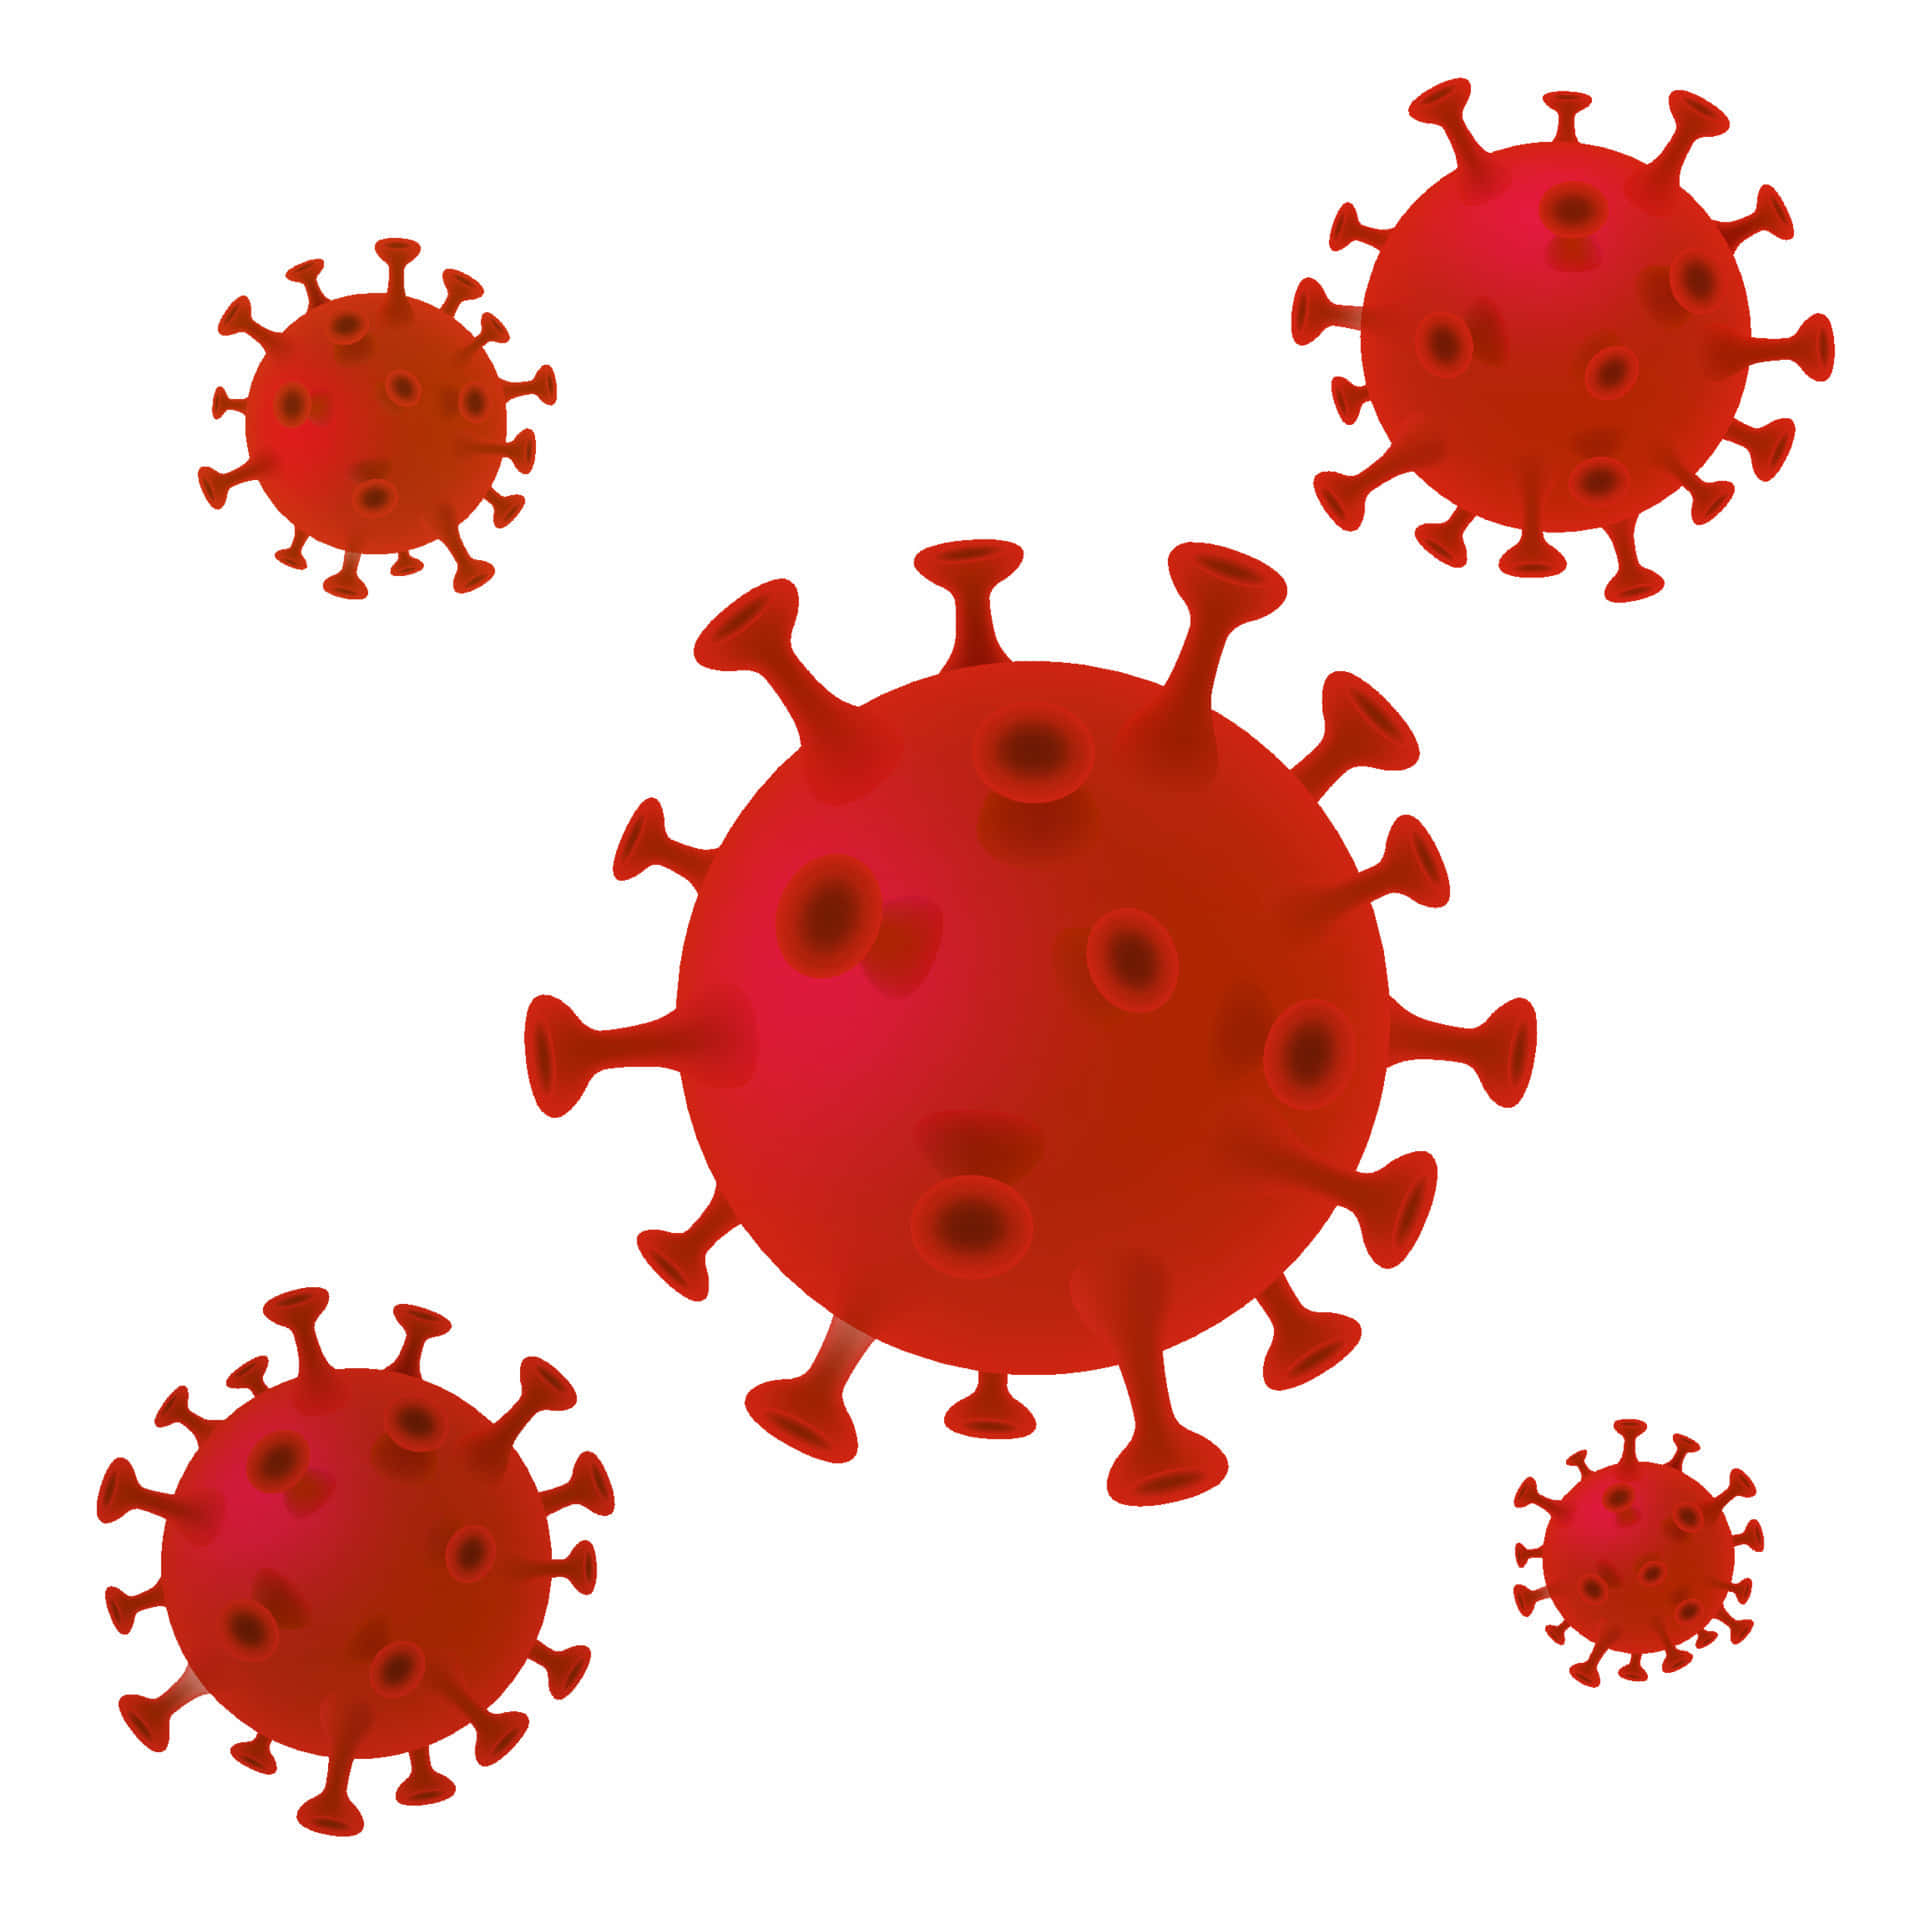 Coronavirus Vector | Price 1 Credit Usd $1